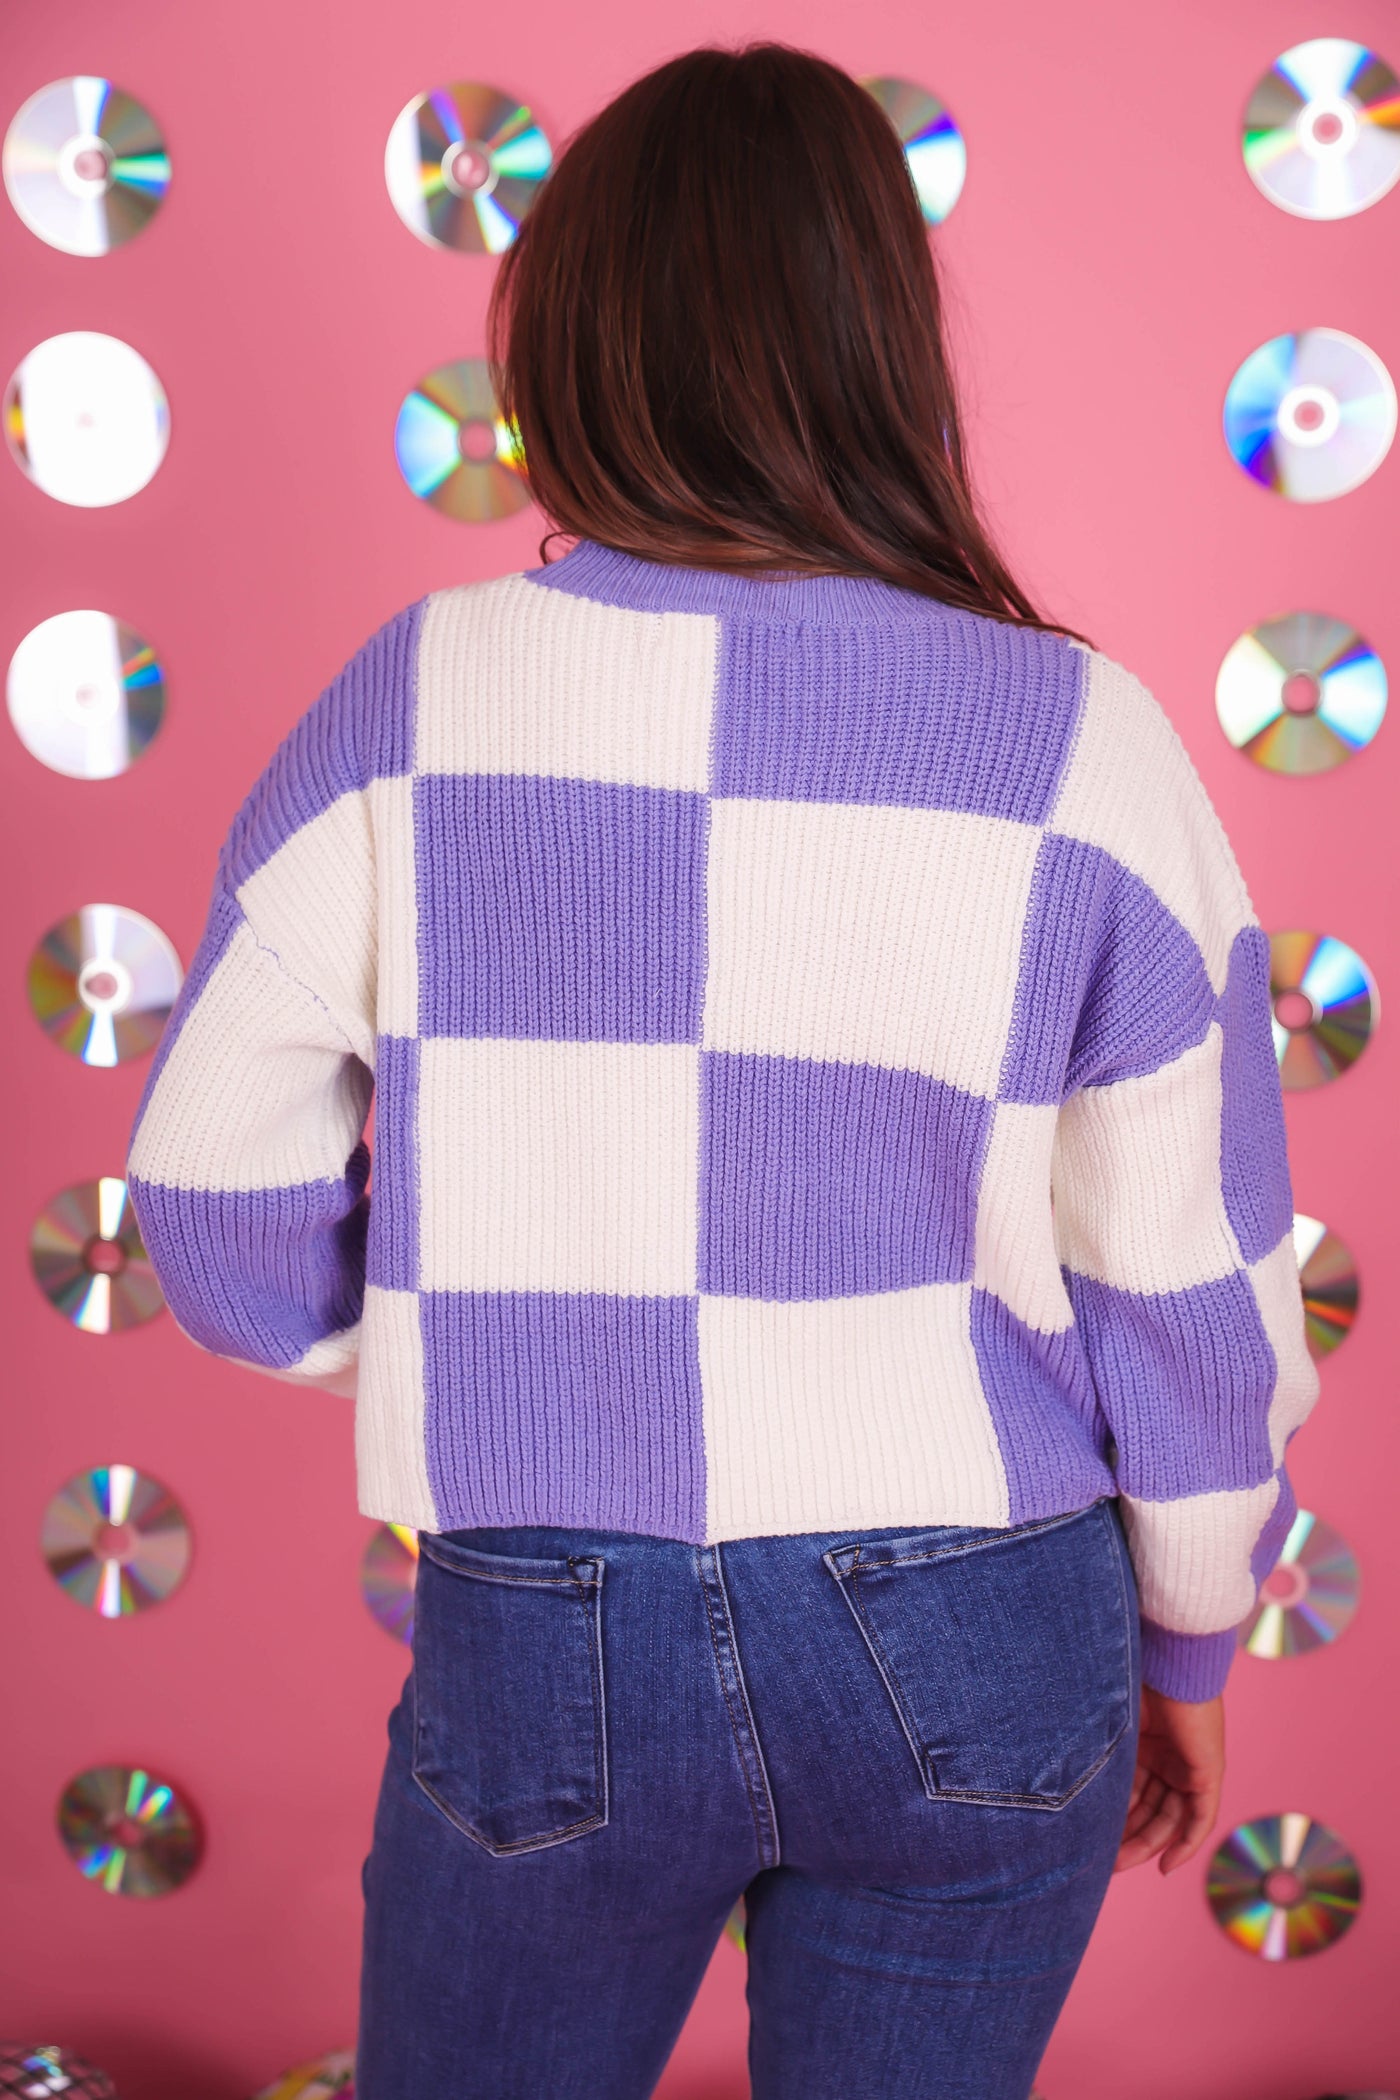 Women's Checkered Sweater- Women's Trendy Sweaters- Fun Check Sweater